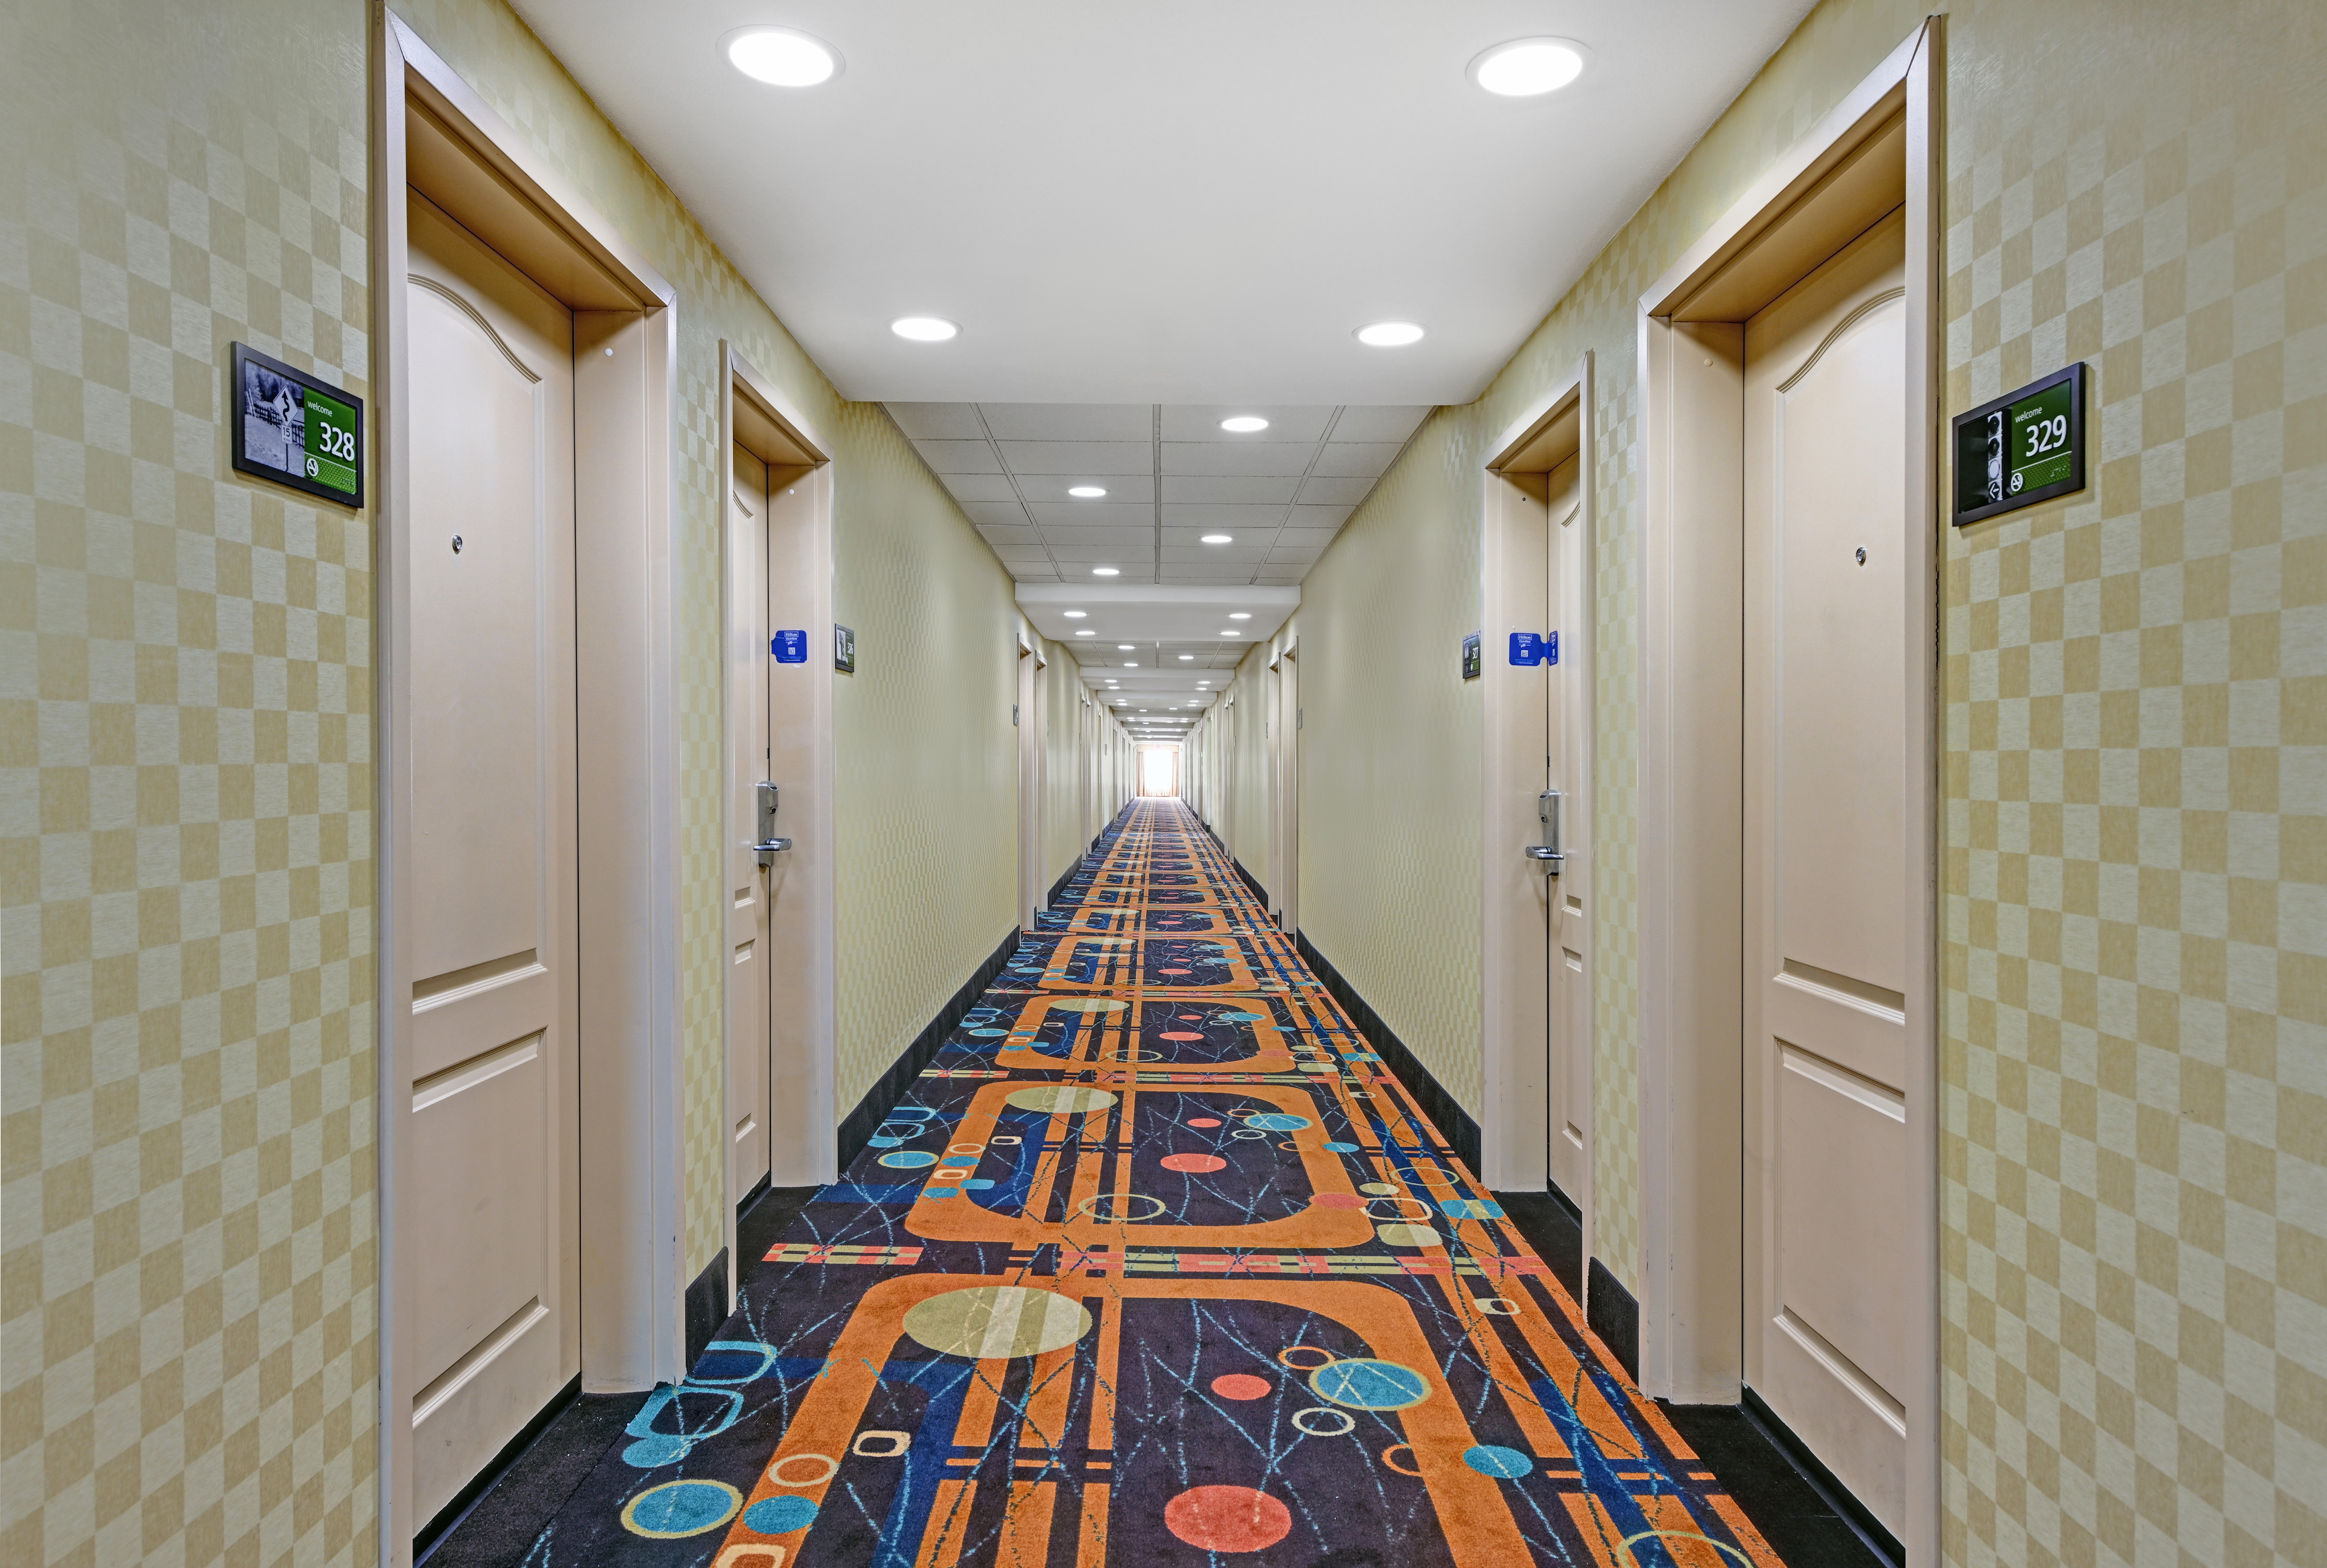 interior hallway